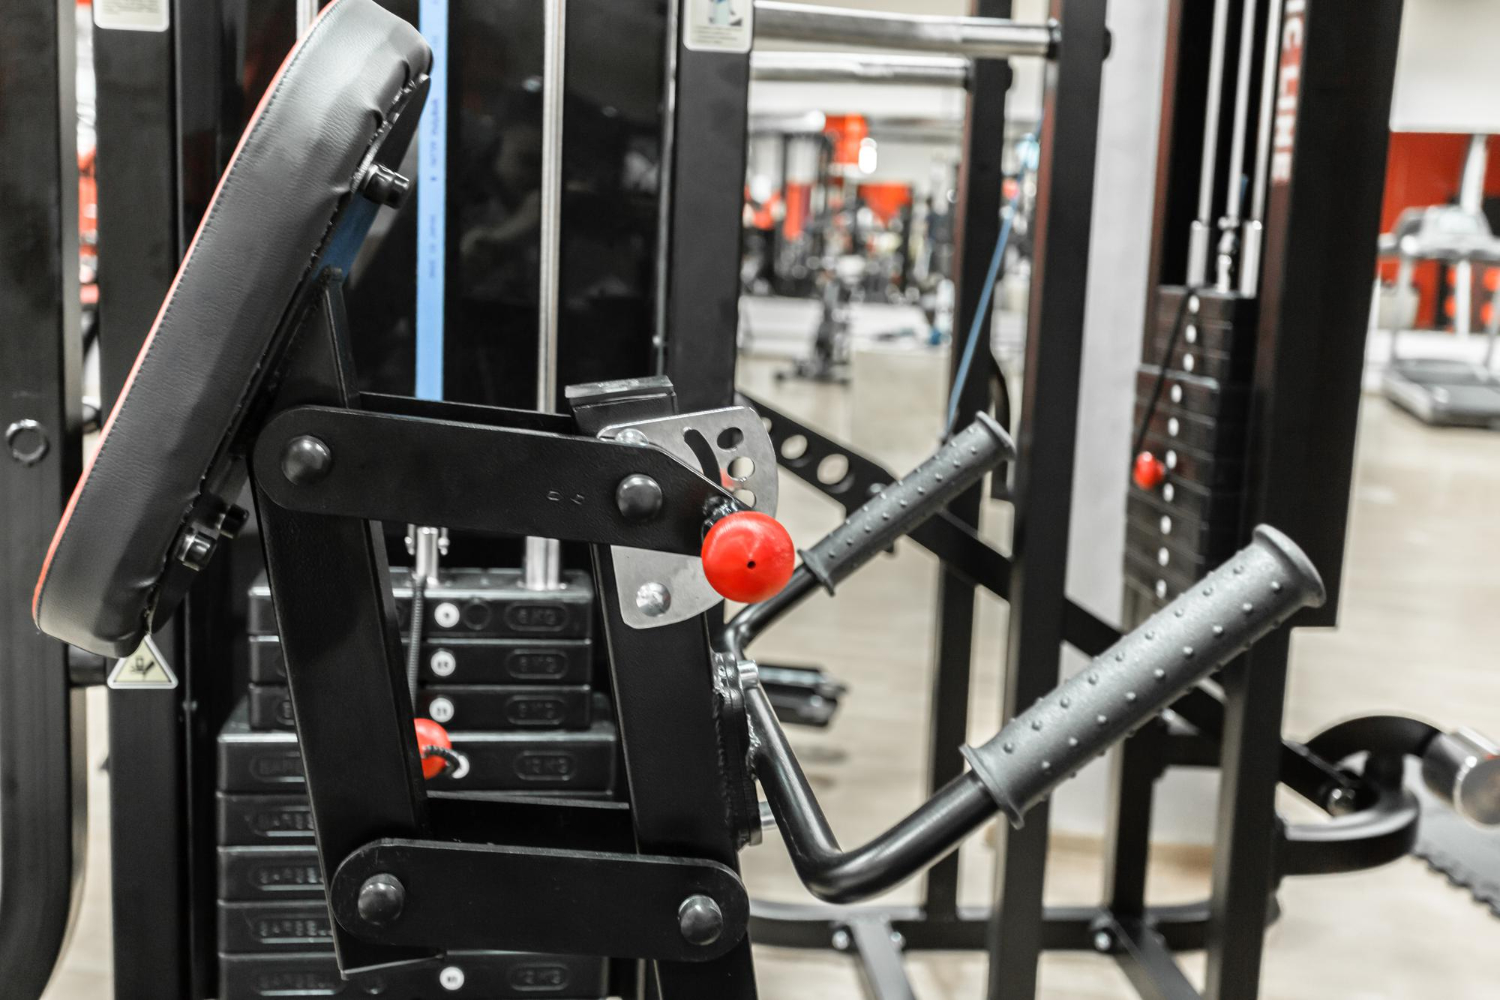 bodybuilding gym interior with equipment